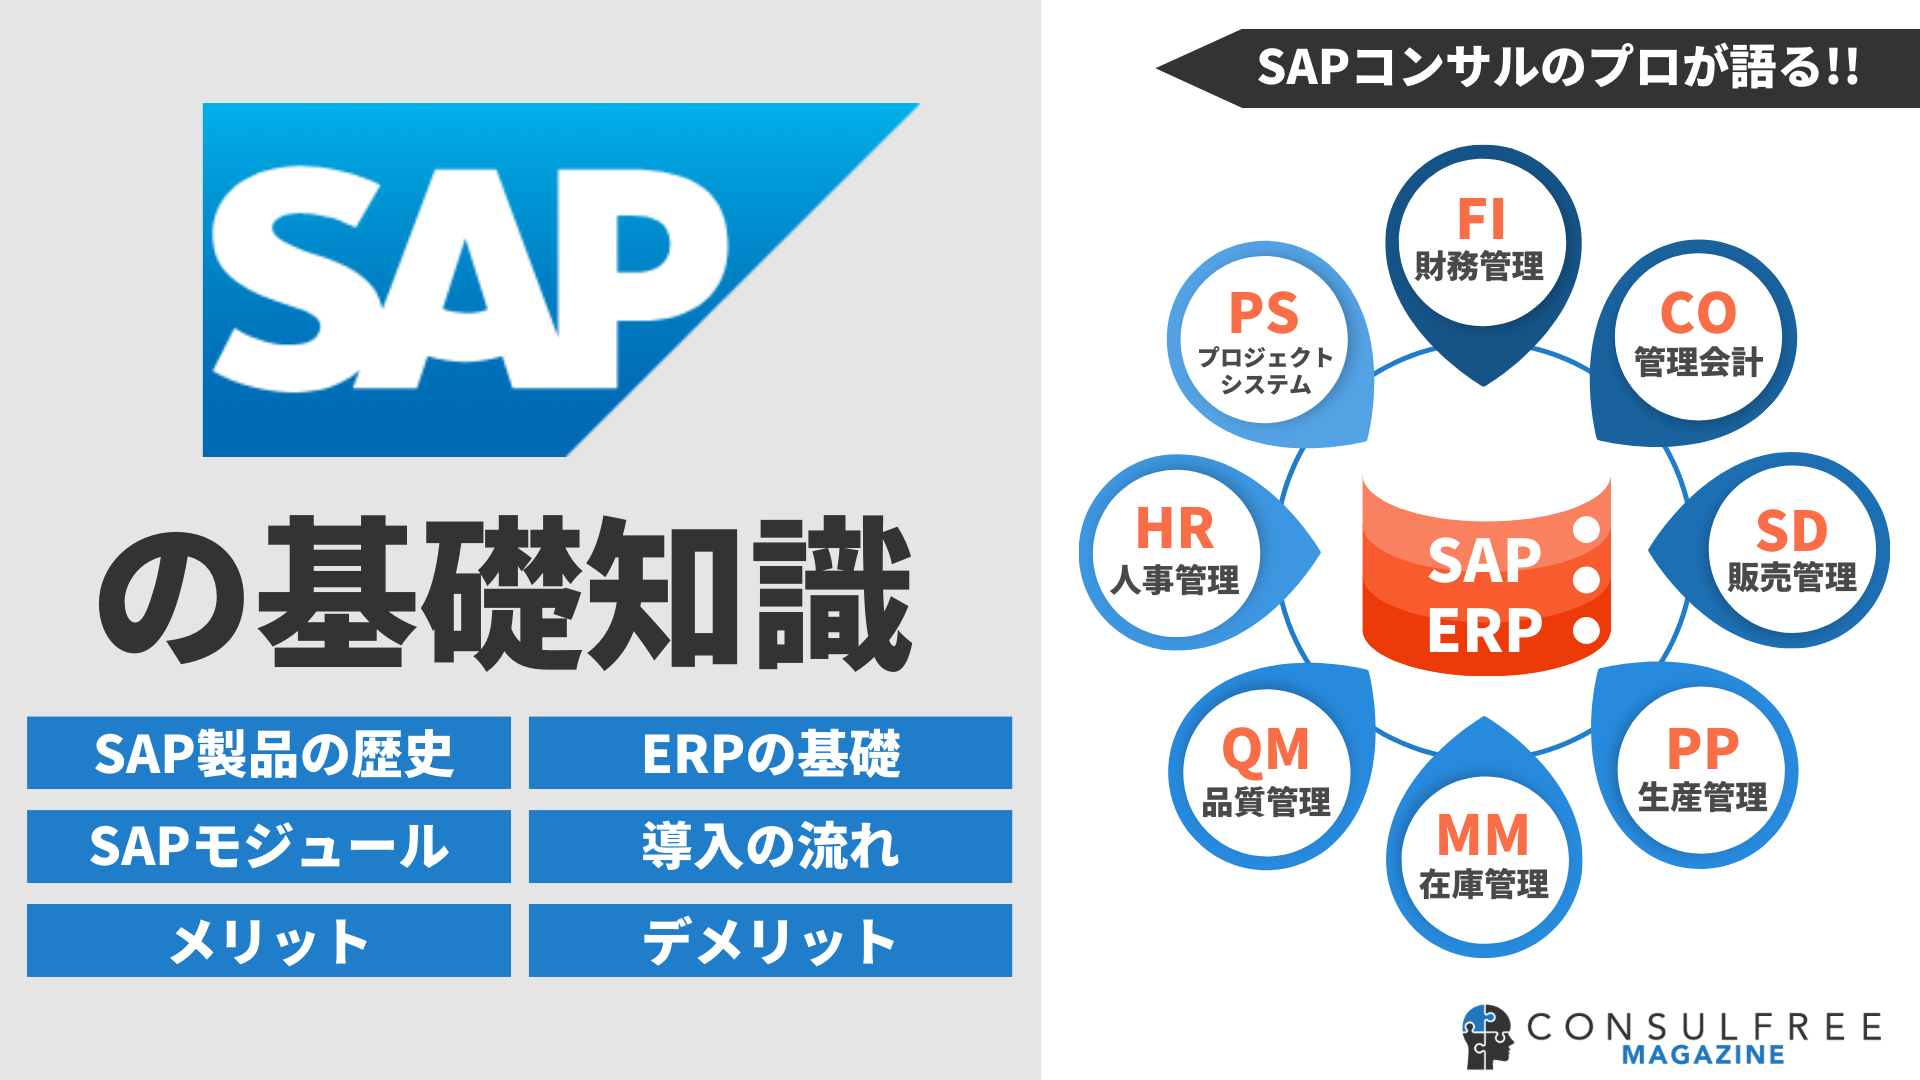 SAPとは？基本機能・特徴、IT導入の流れを初心者向けに簡単に図解